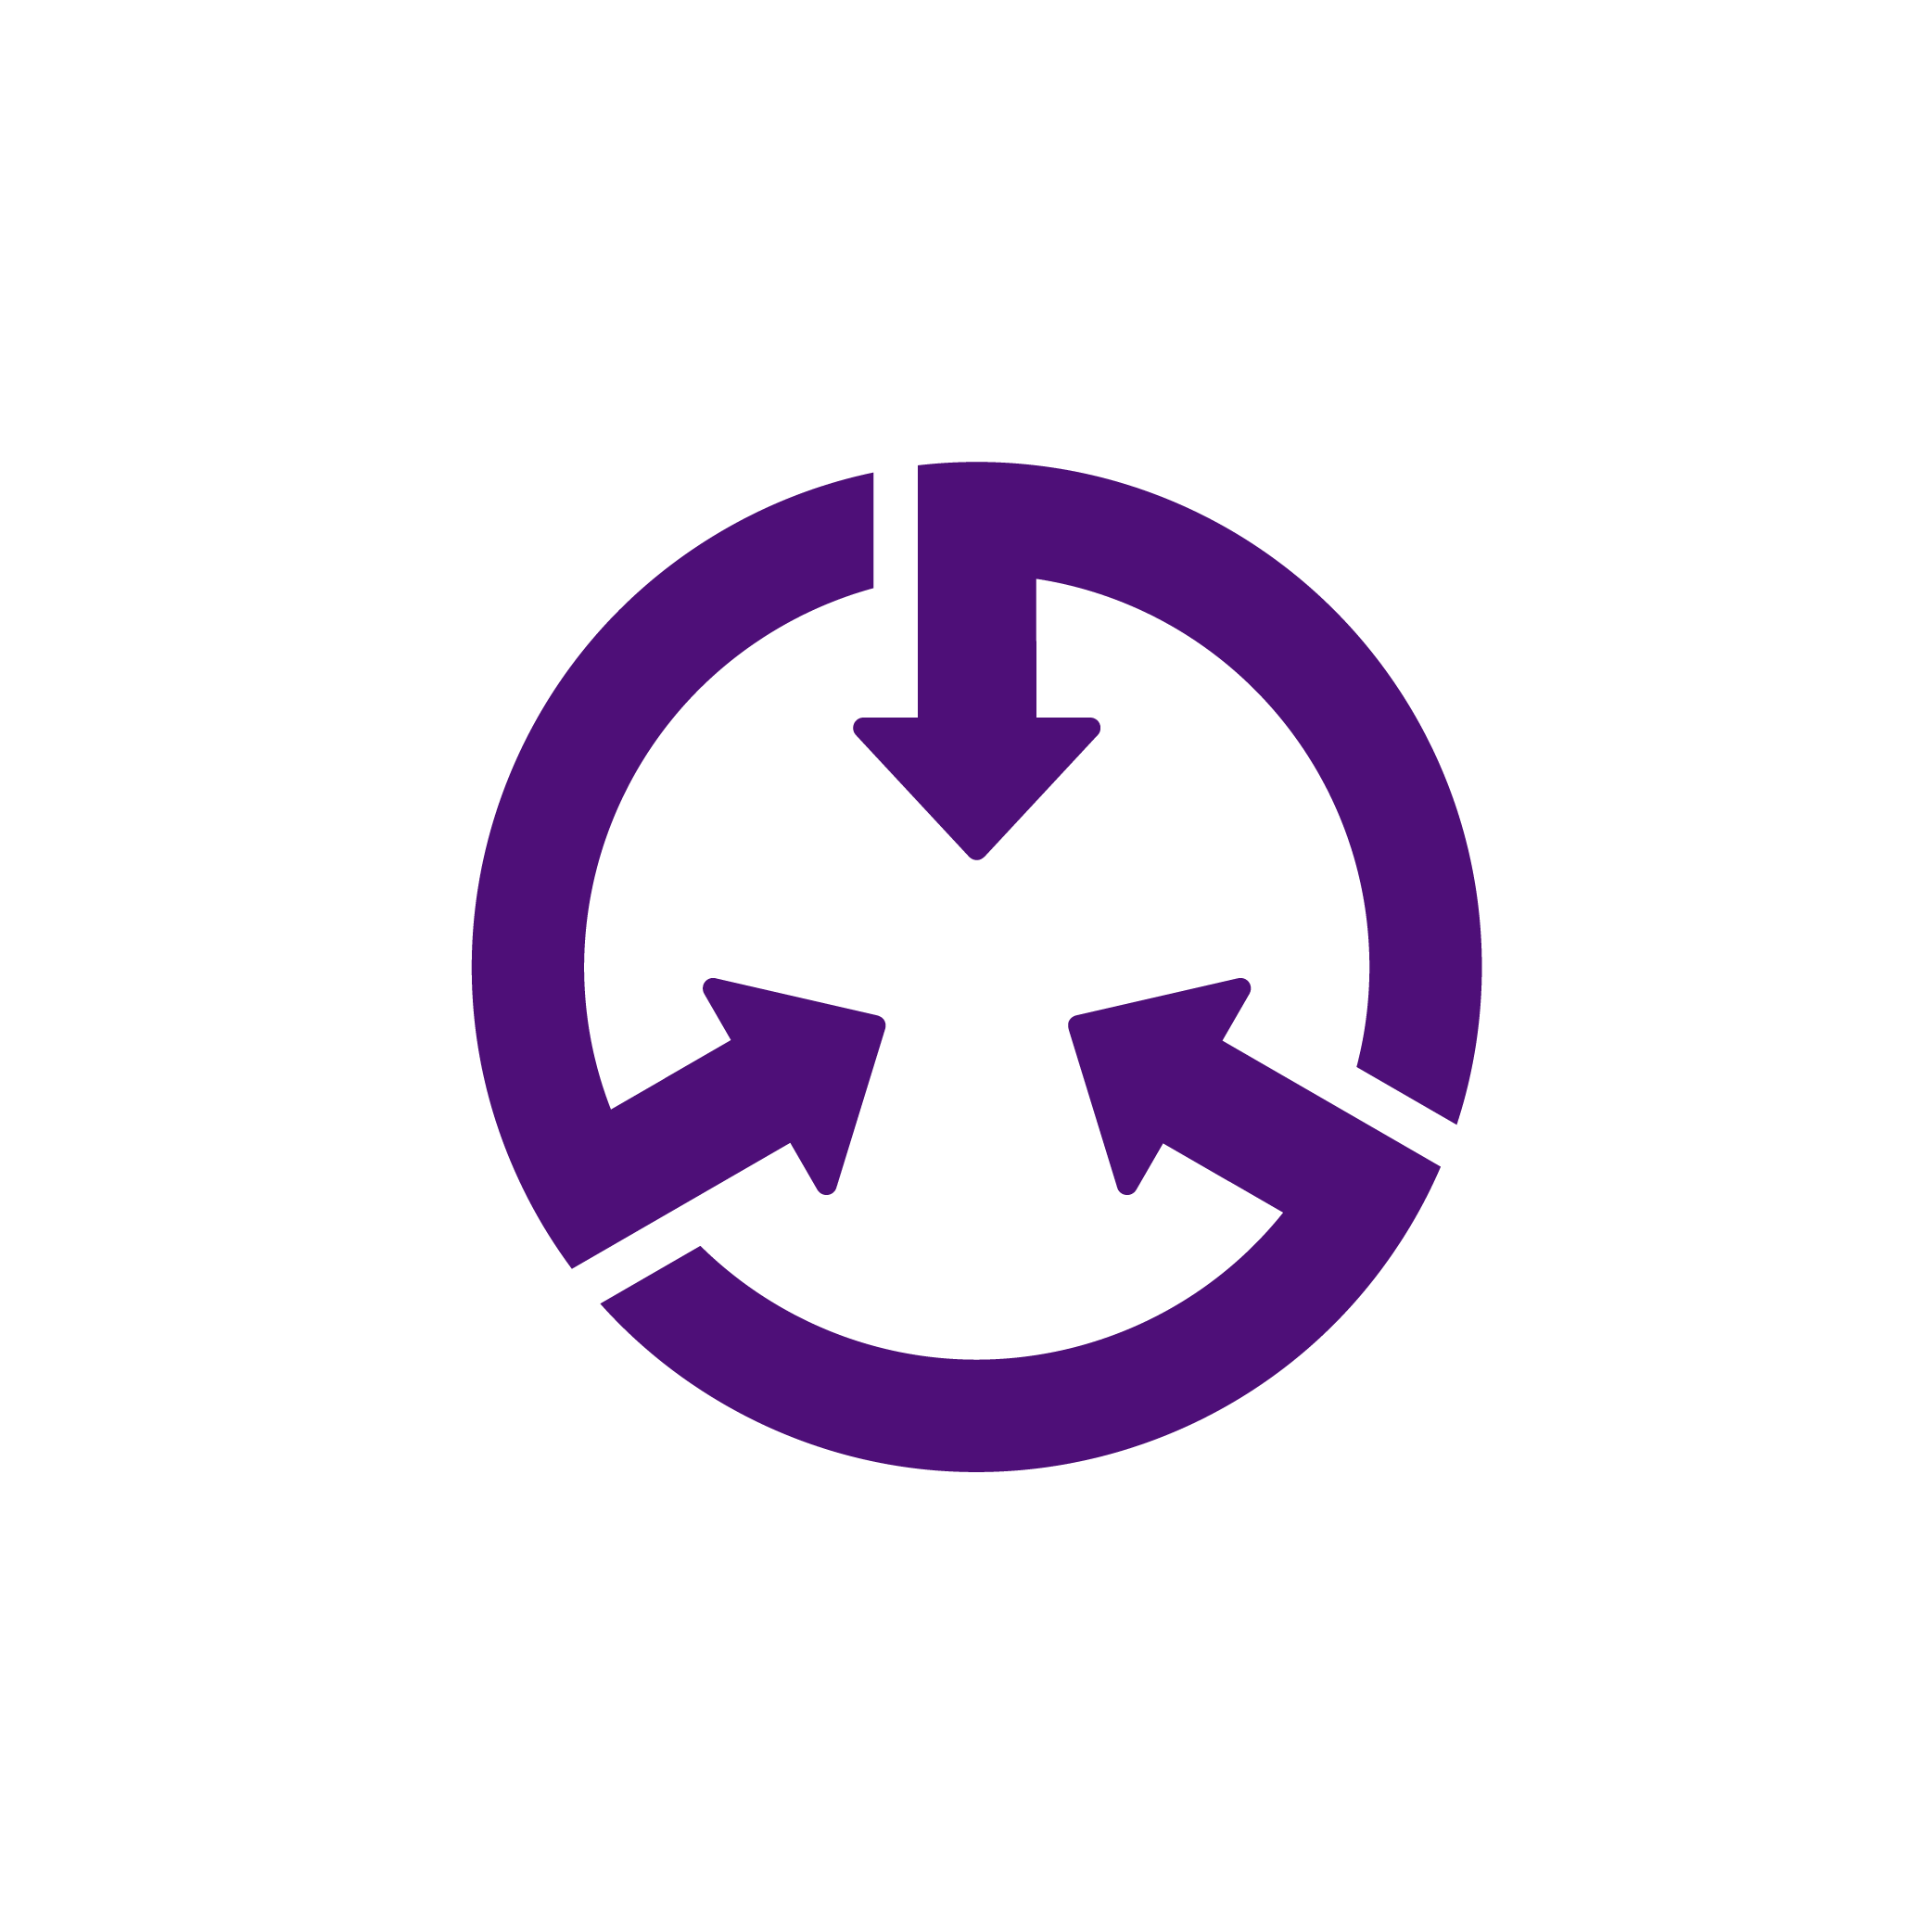 A dark purple icon of a circle consisting of three arrows pointing inward